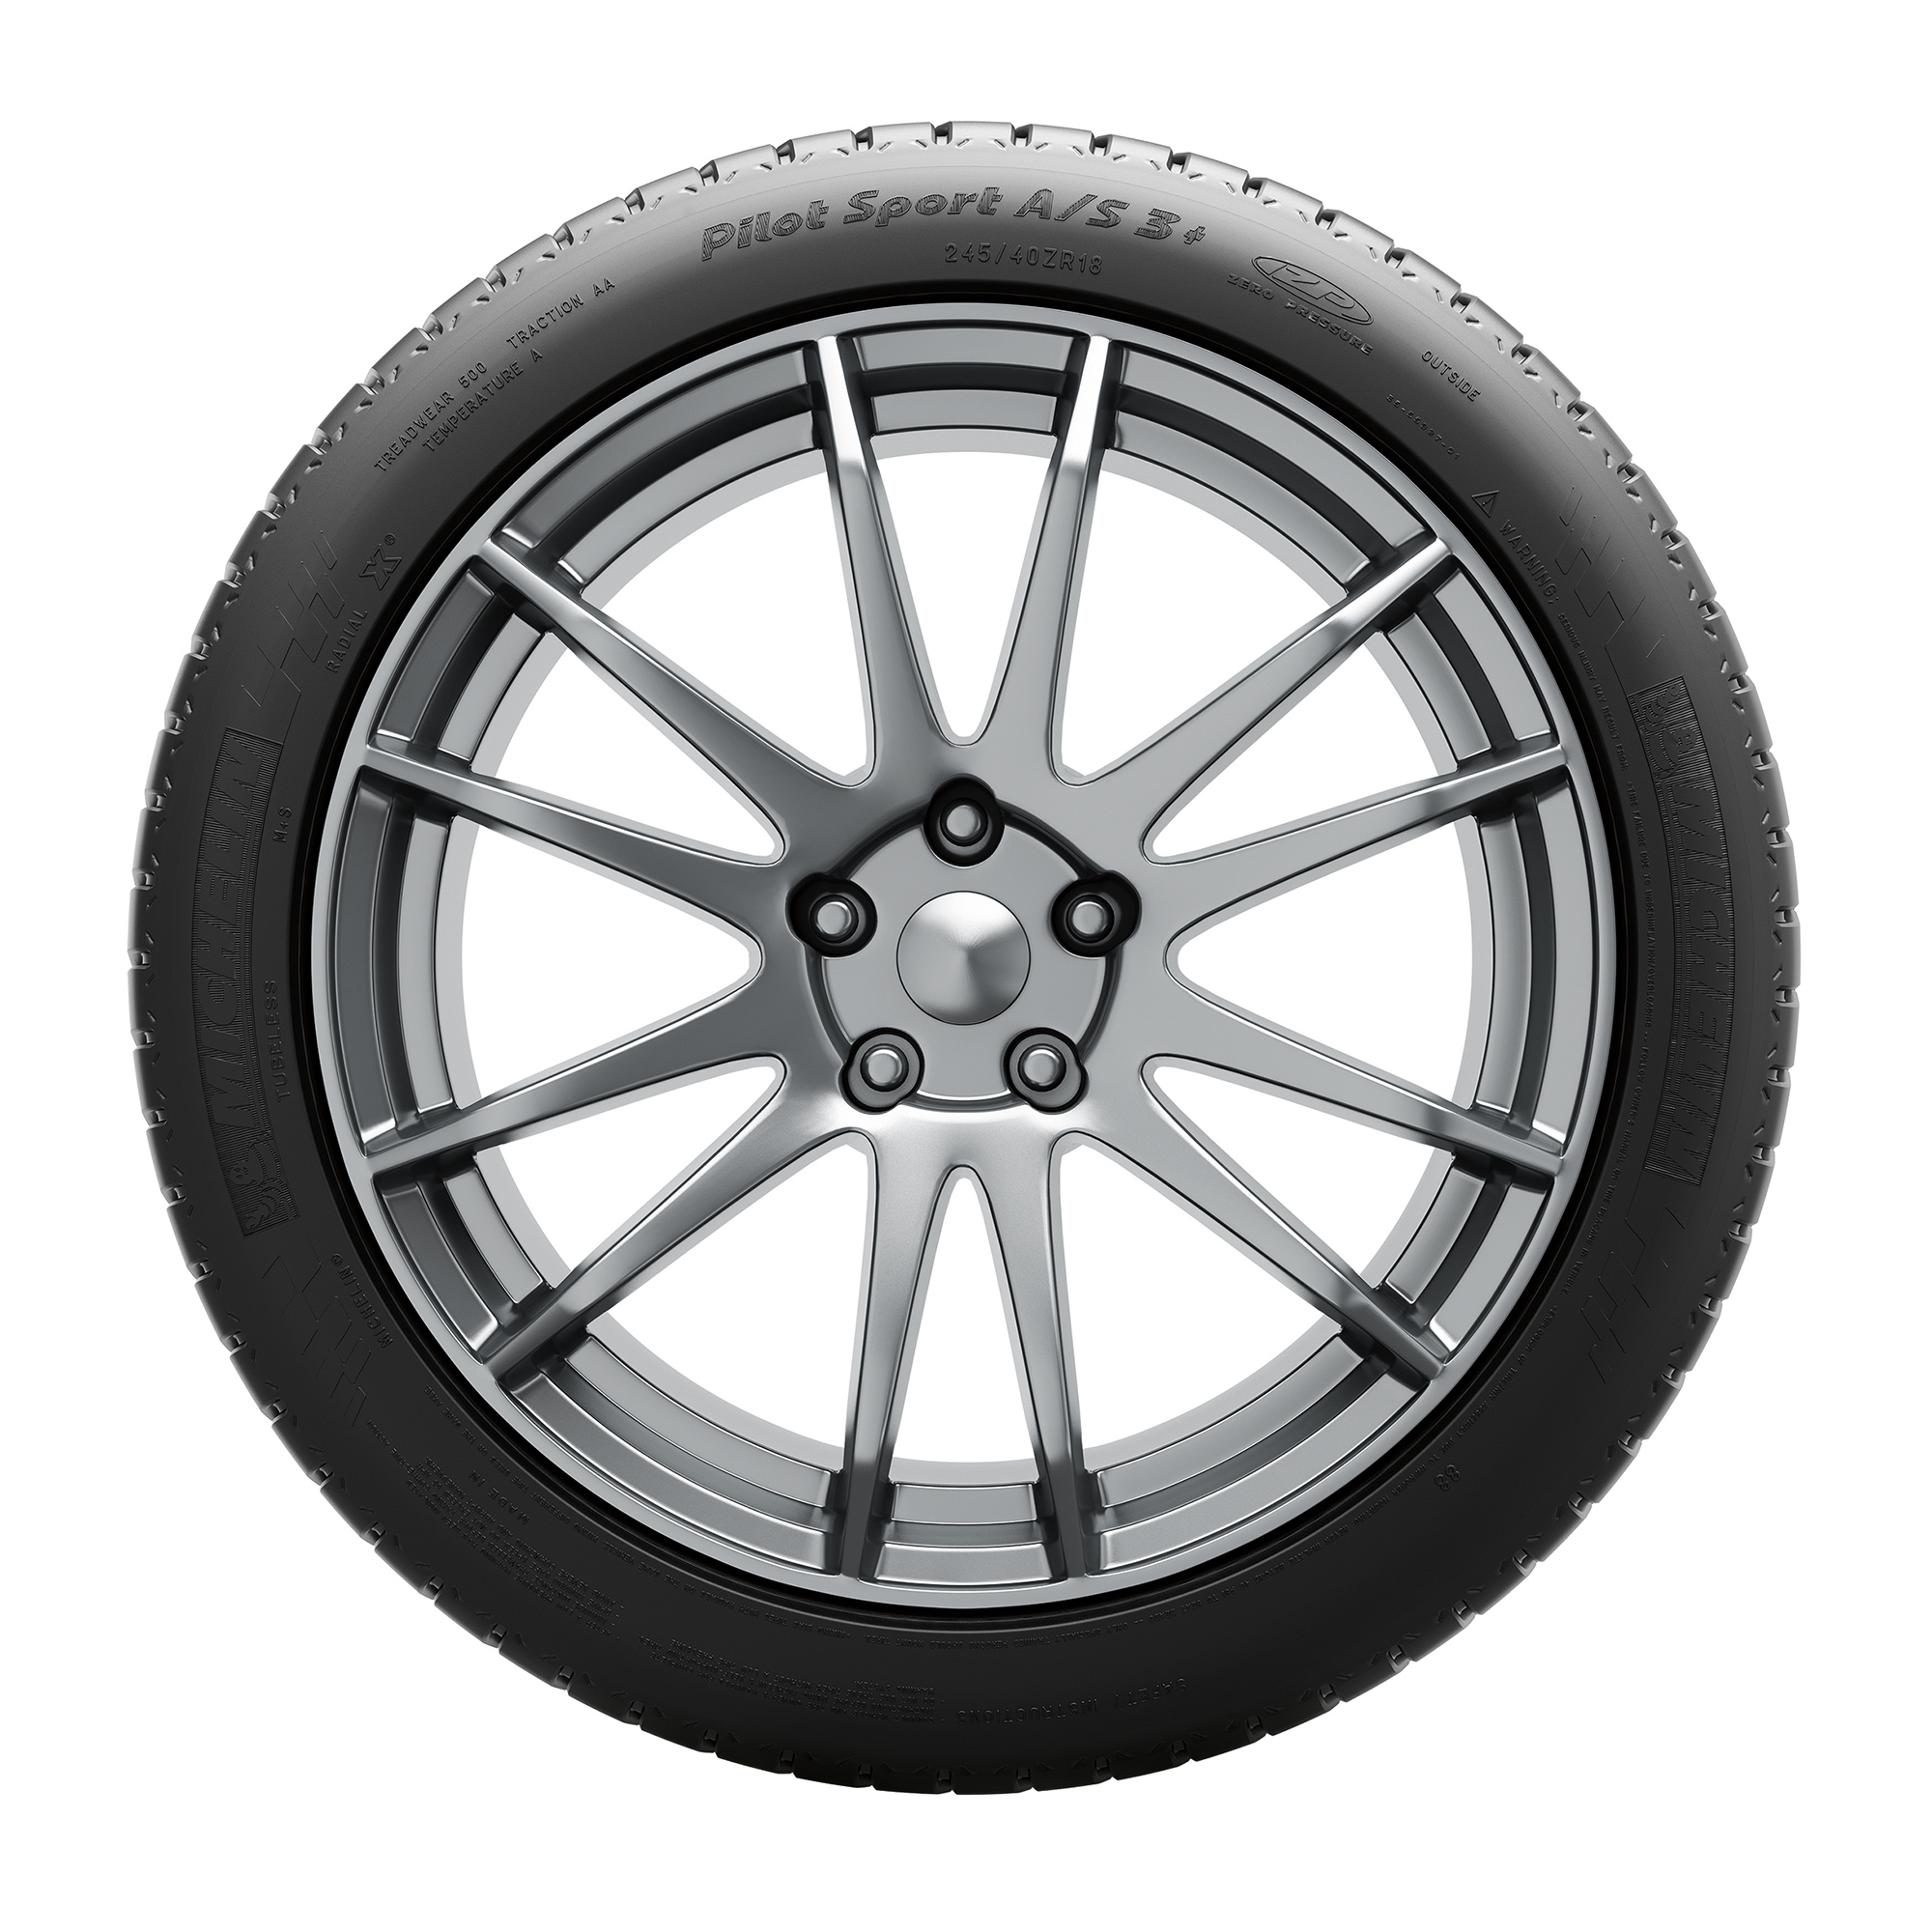 Michelin Pilot Sport A/S 3+ 245/40R19 94 V Tire - image 2 of 6